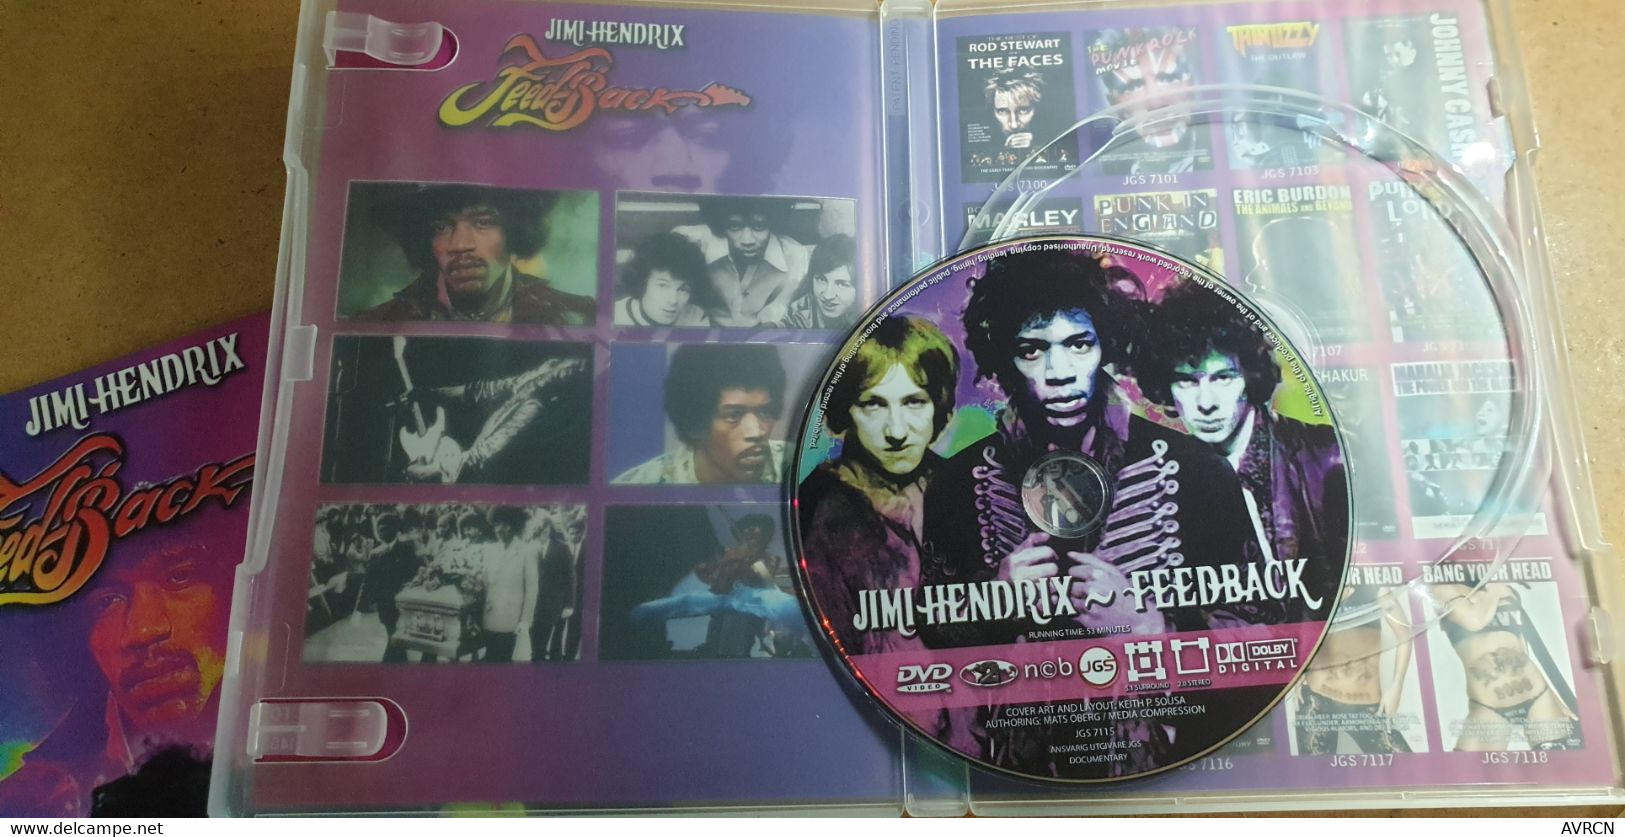 JIMI HENDRIX - FEEDBACK - DVD « NCB-JGS 7115 ». - DVD Musicaux